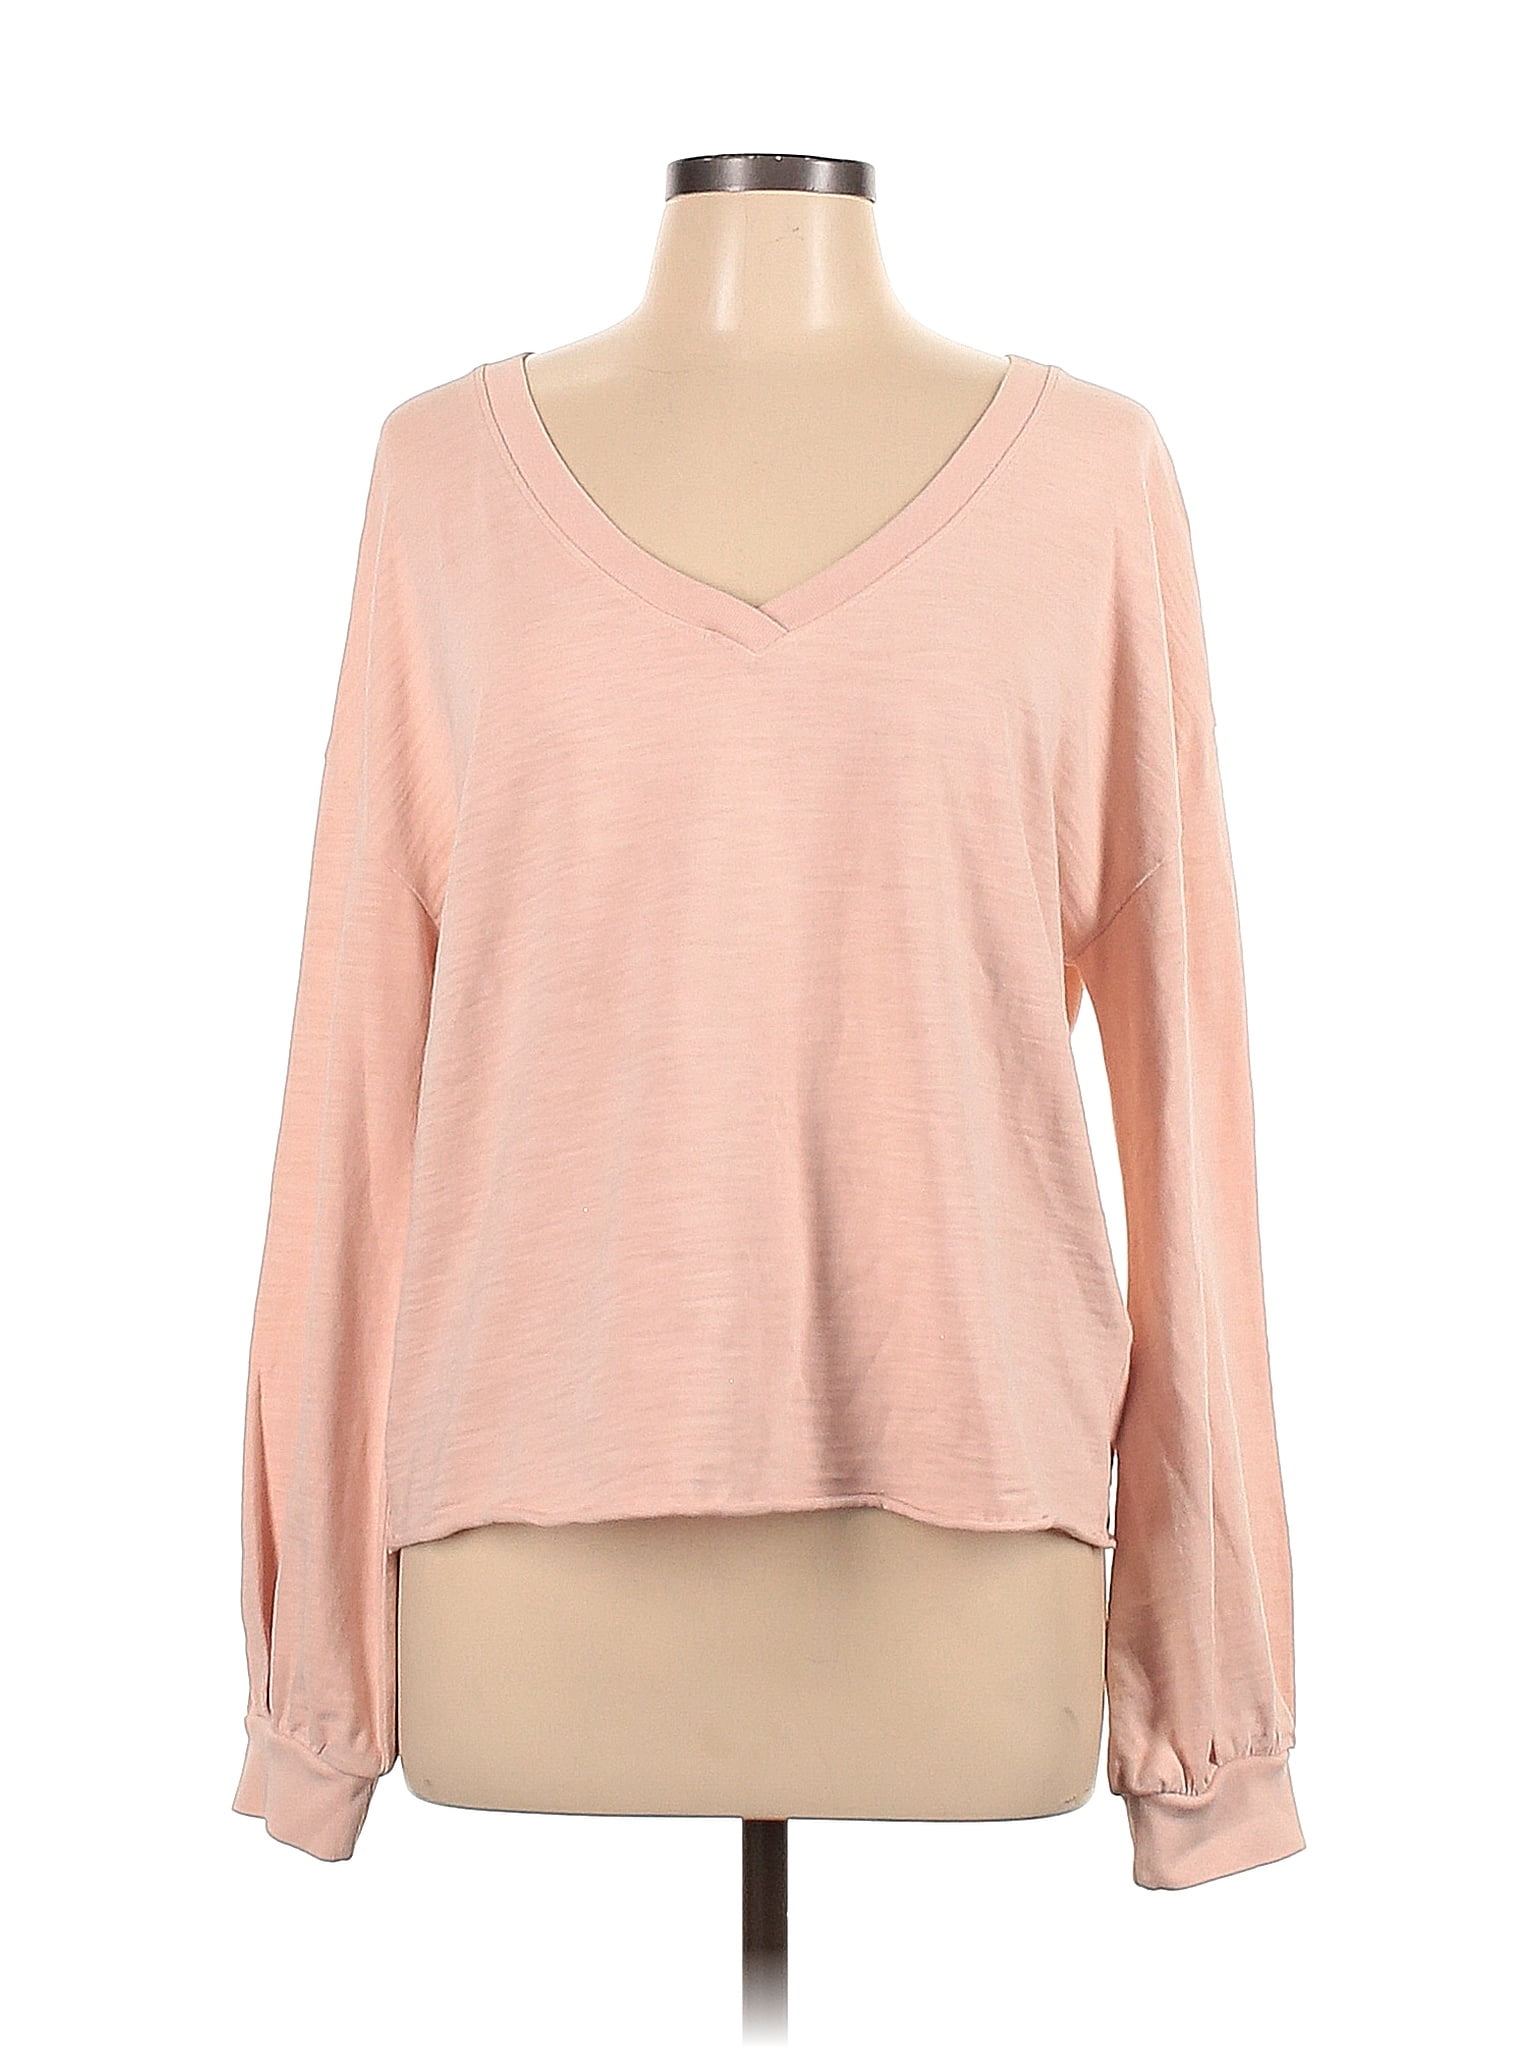 NATION LTD Pink Sweatshirt Size L - 81% off | thredUP